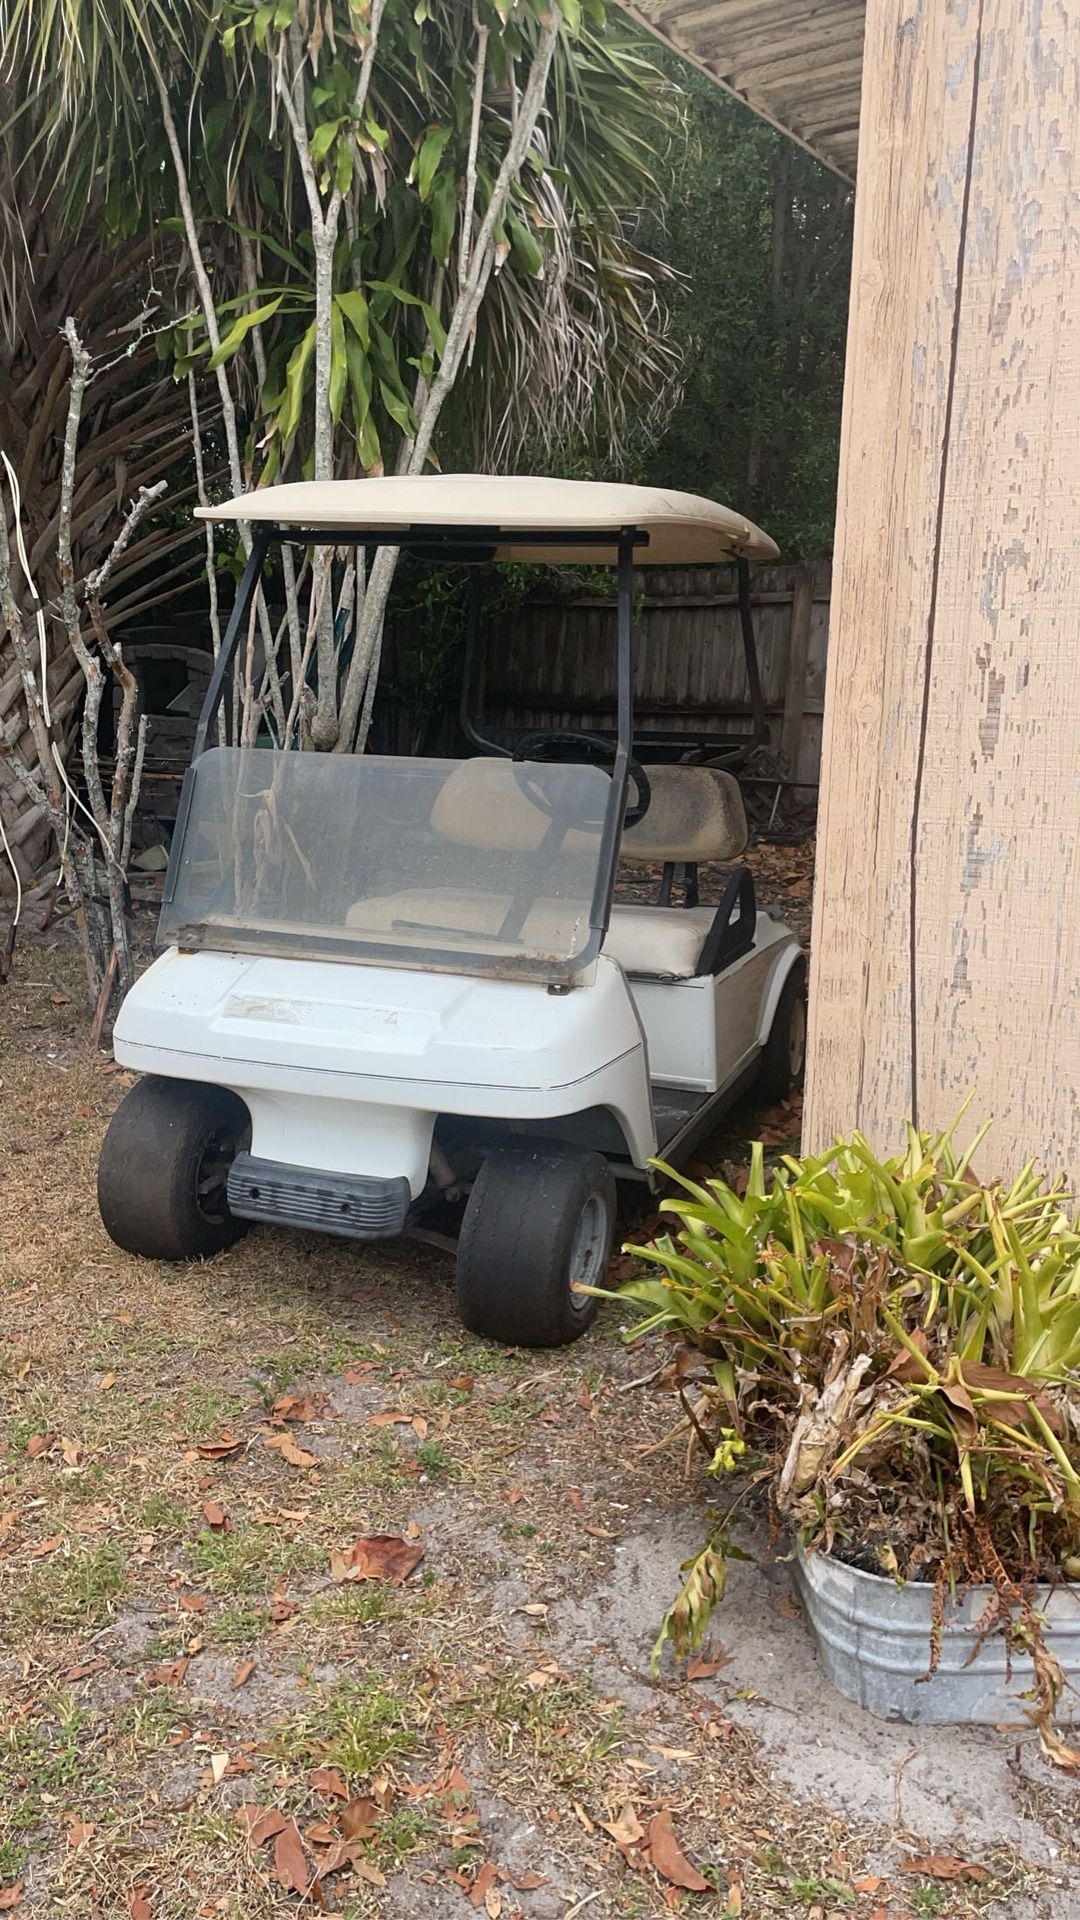 Club Car Golf cart 